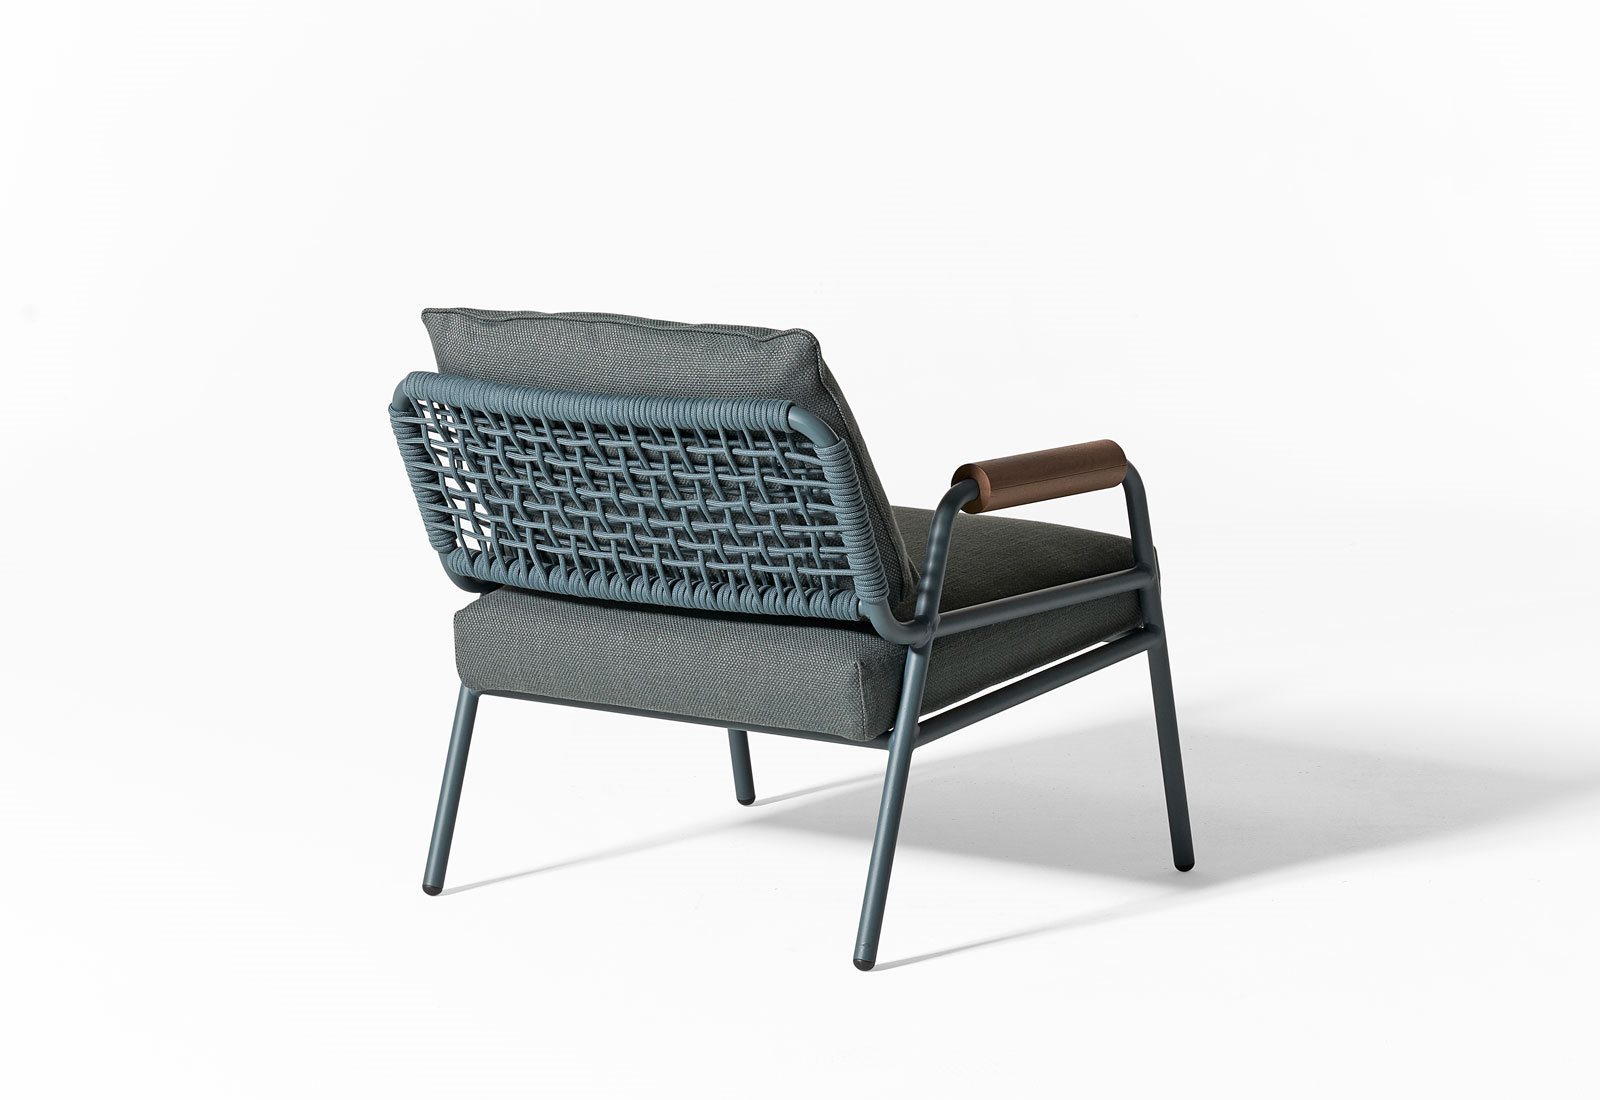 Zoe-Wood-open-air-armchair-07-1600x1100